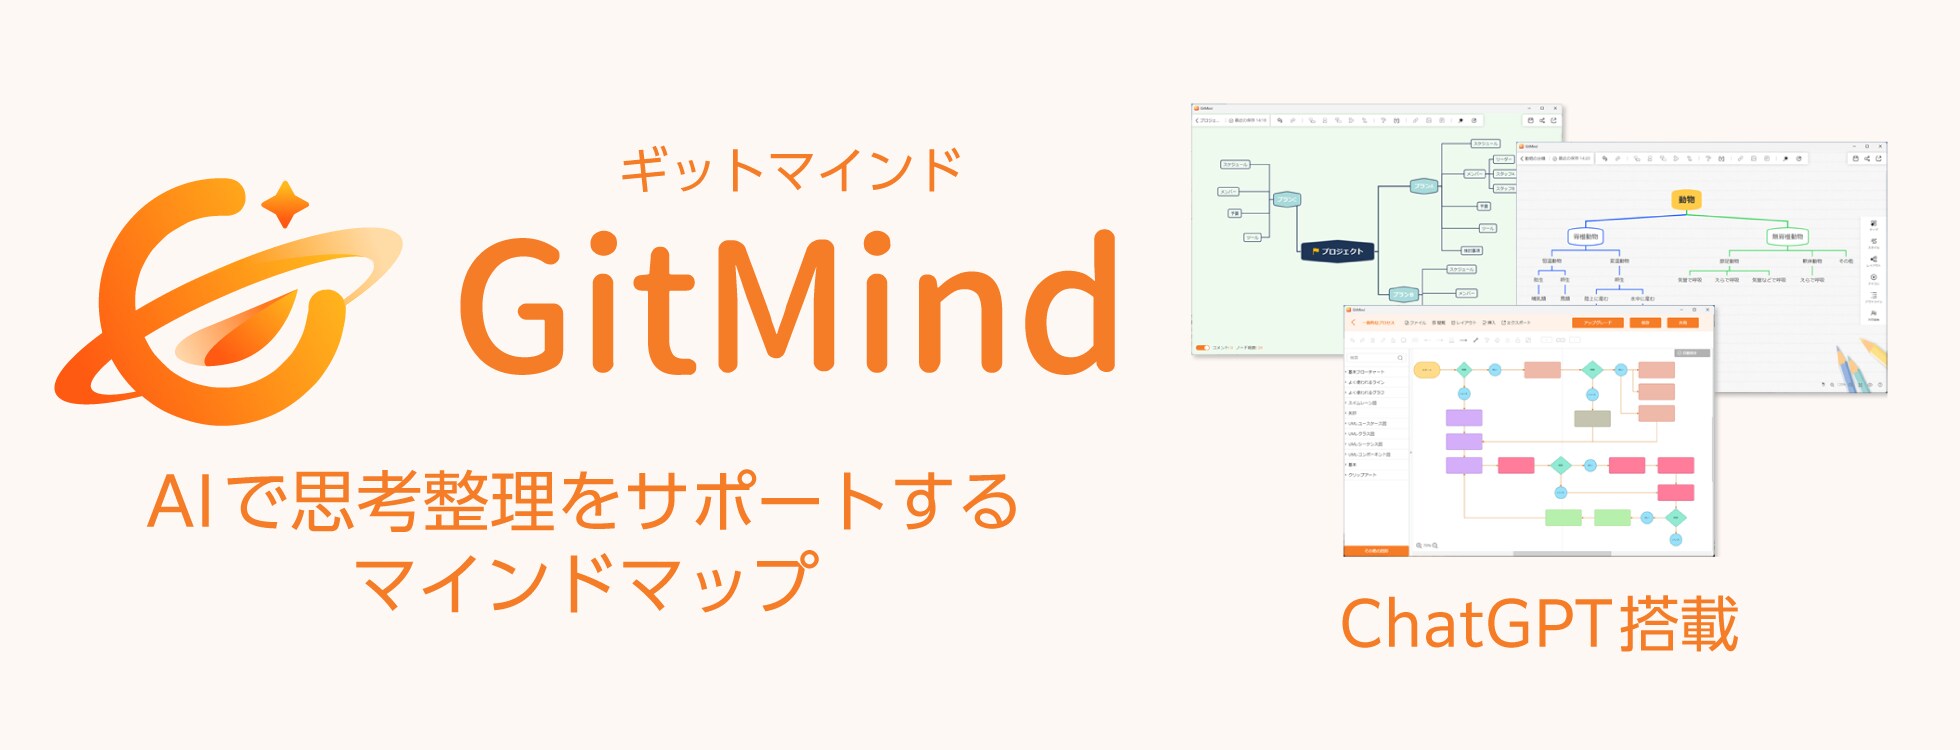 ChatGPT搭載のマインドマップツール「GitMind」